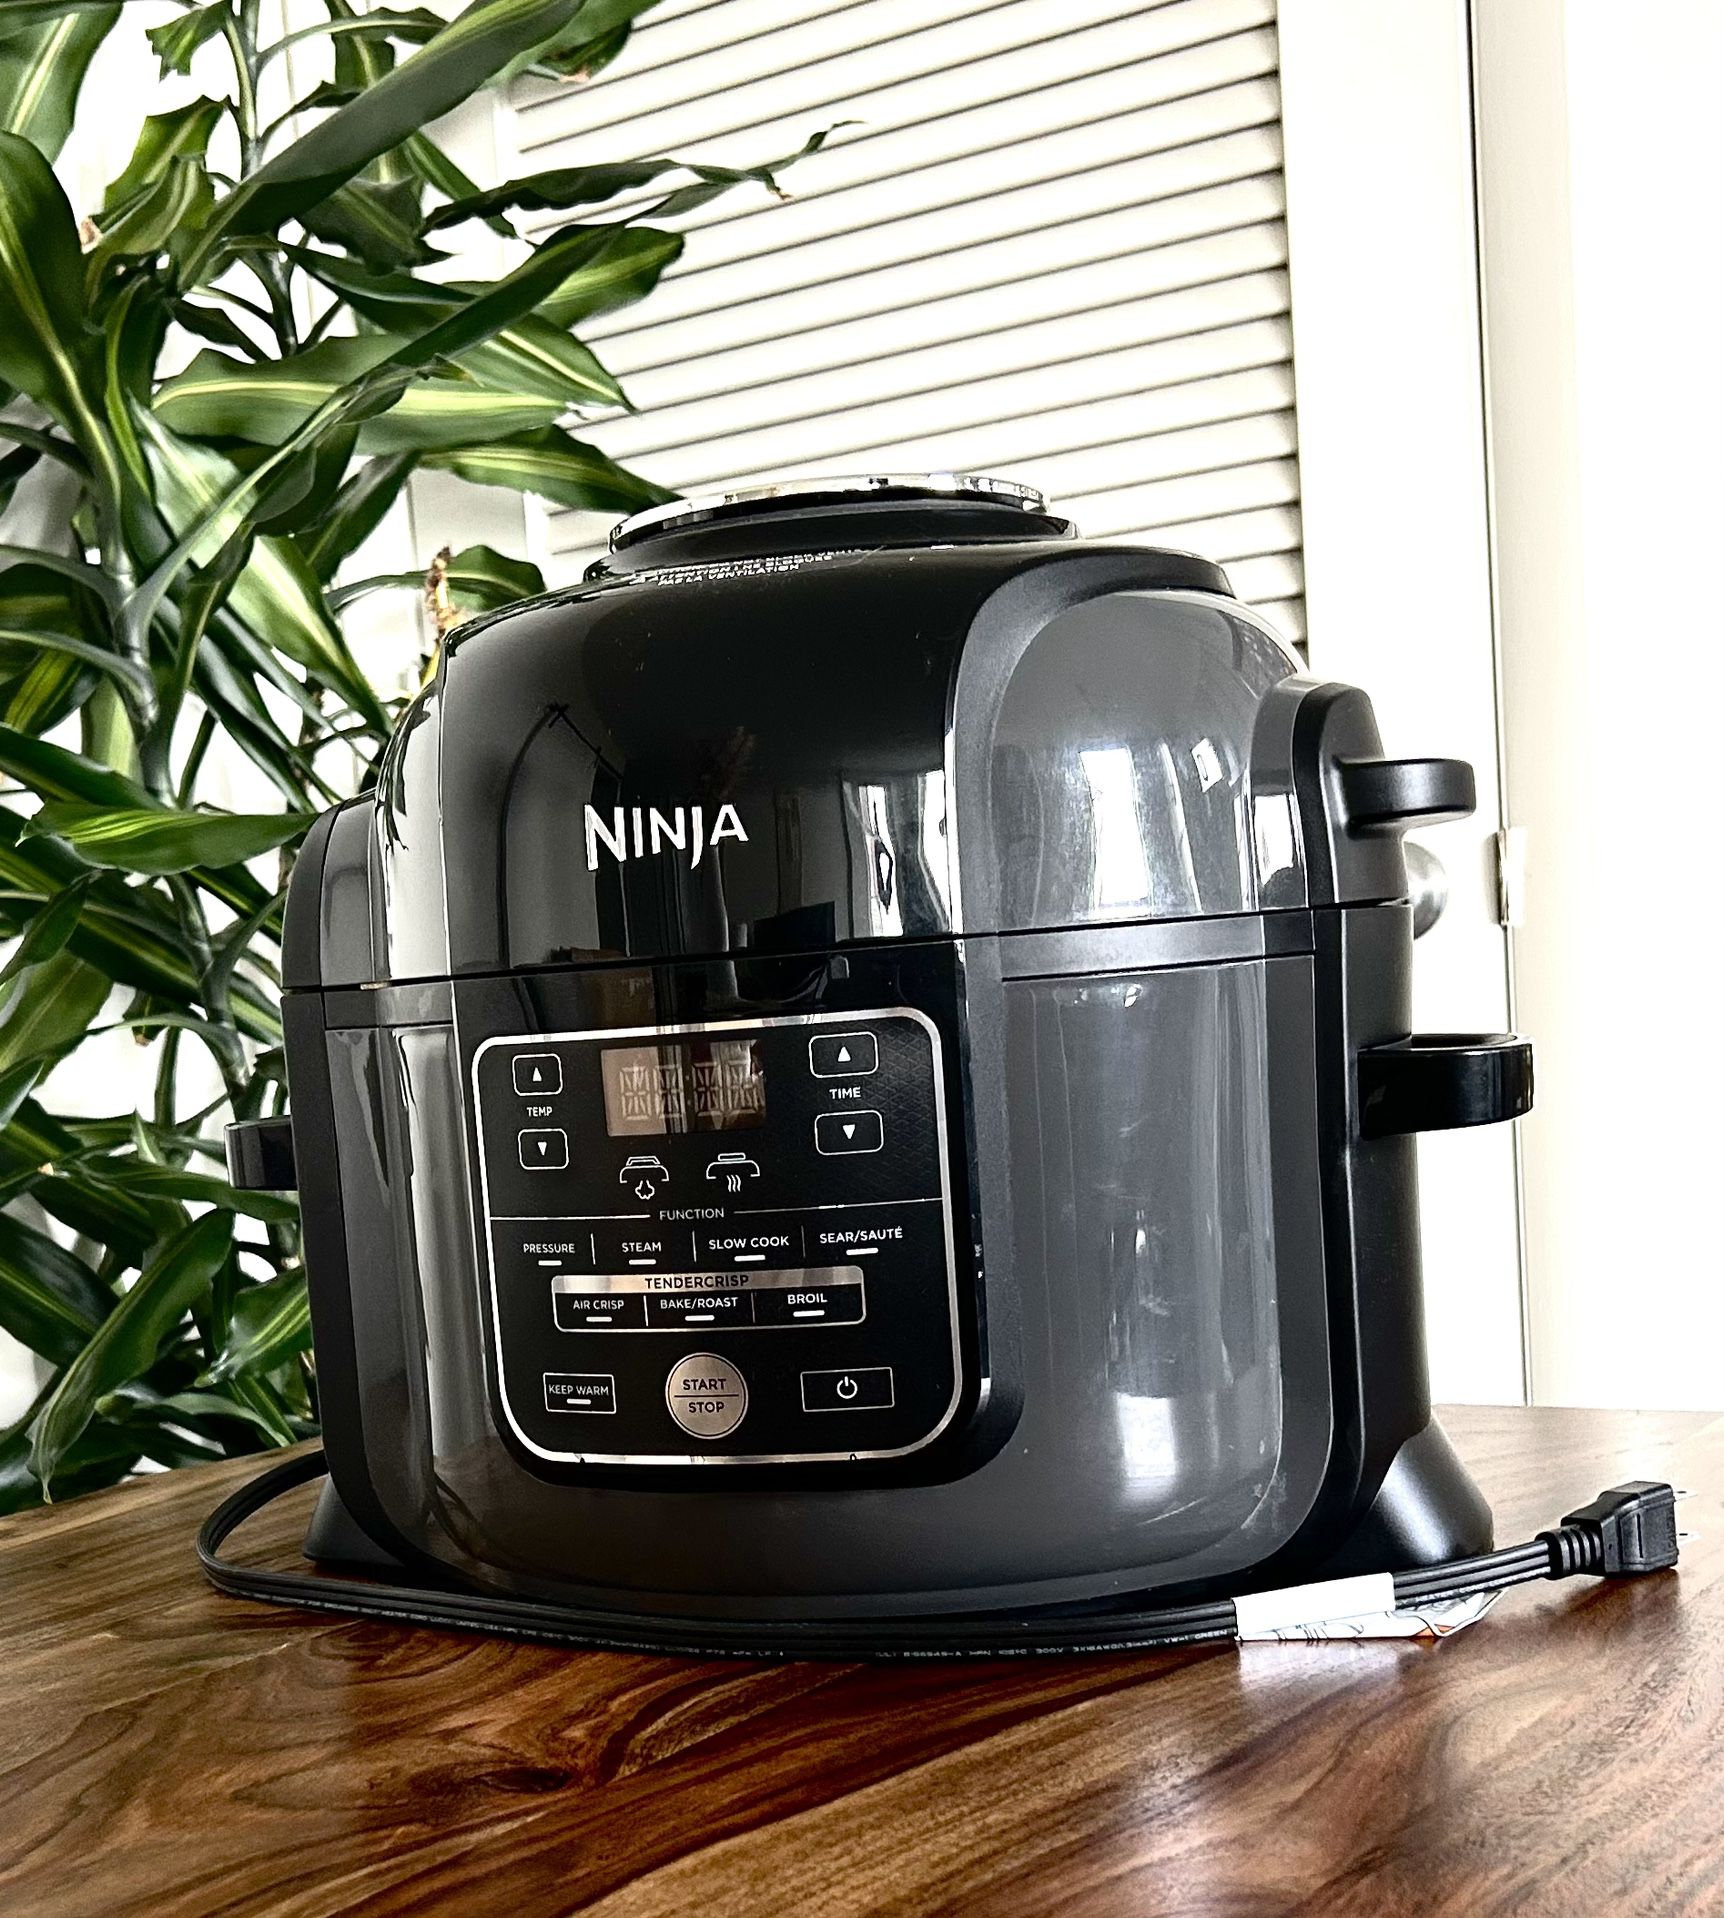 NINJA Pressure Cooker / Slow Cooker / Air Fryer